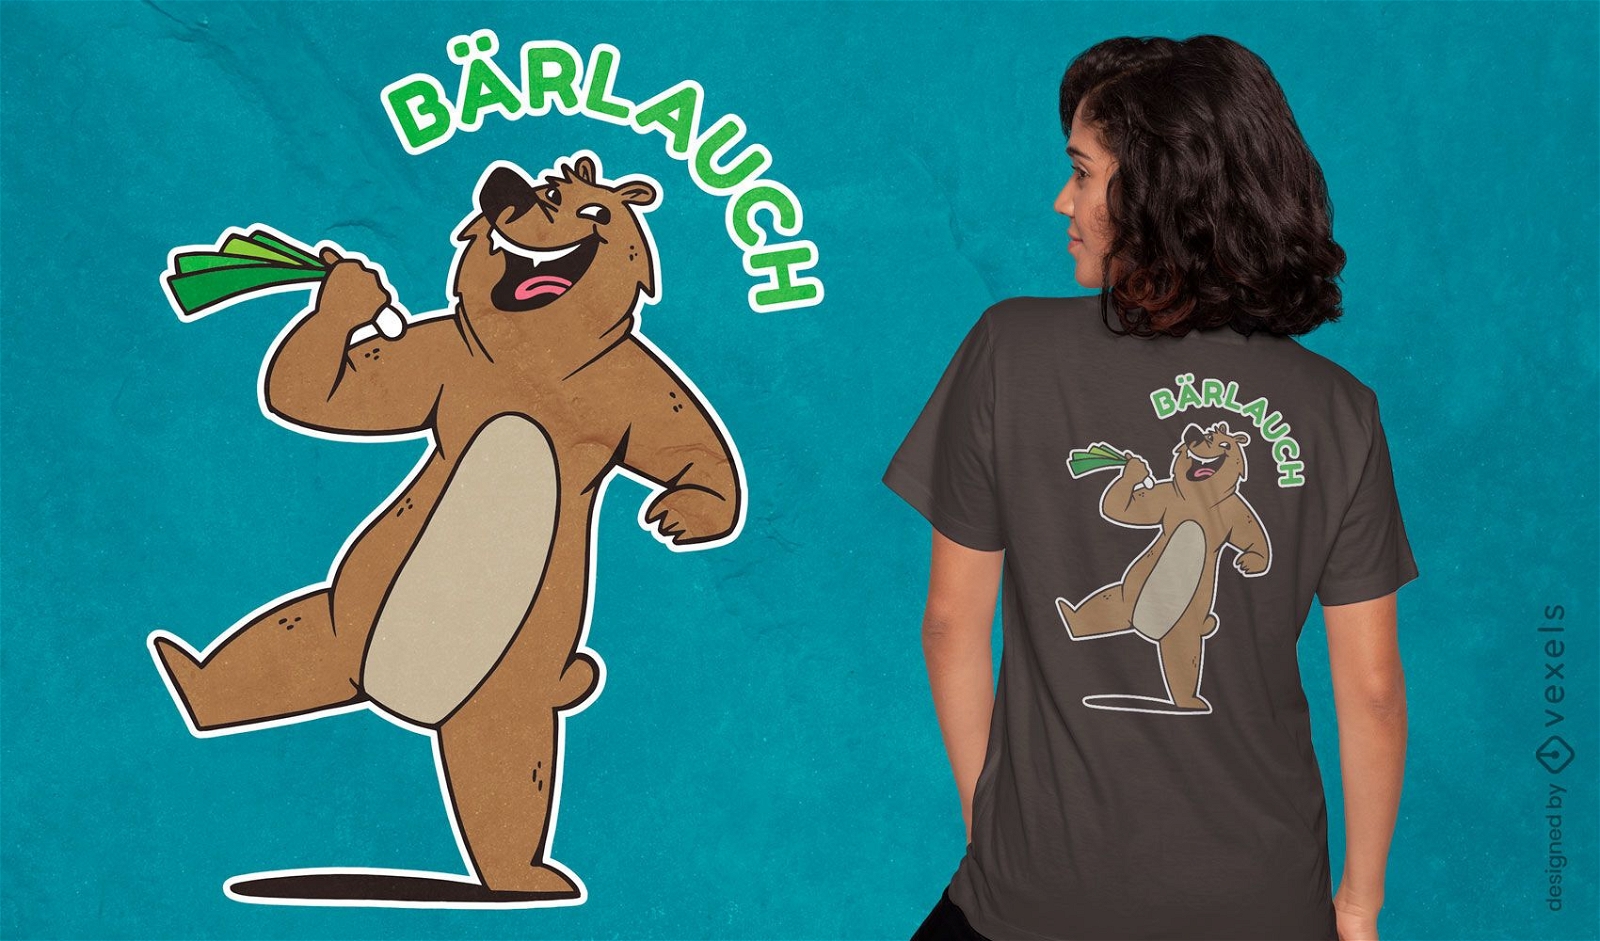 Fun laughing bear t-shirt design